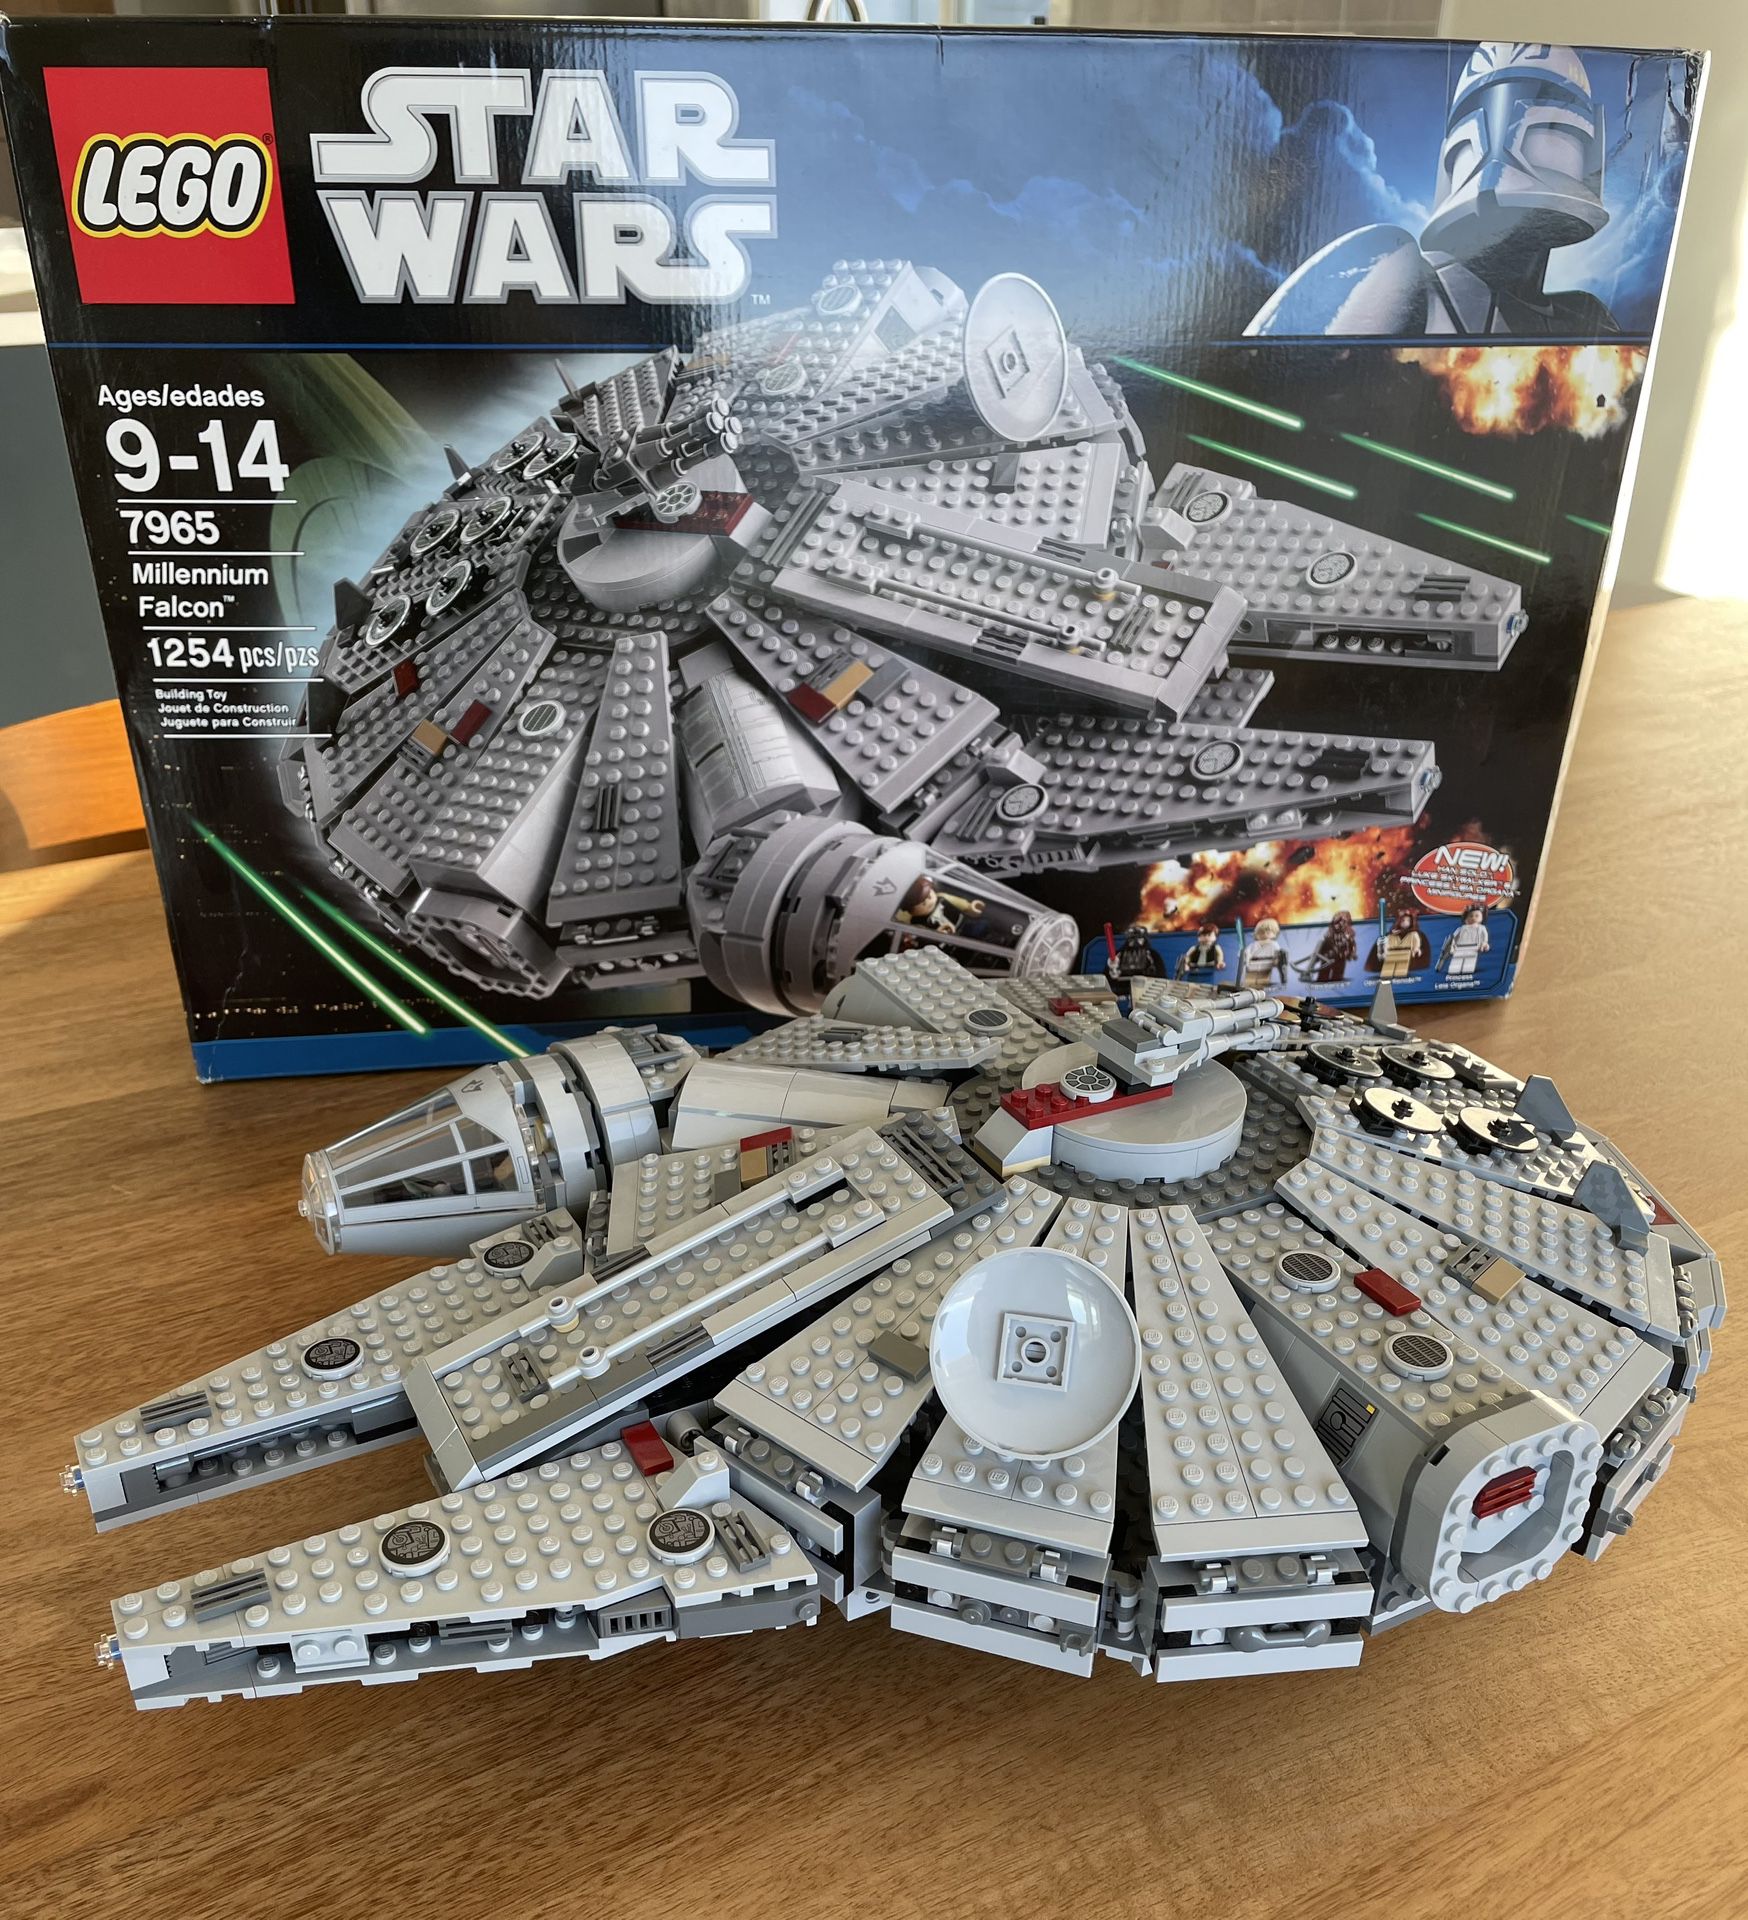 tøffel Blodig At håndtere LEGO Star Wars Millennium Falcon 7965 for Sale in Spokane, WA - OfferUp